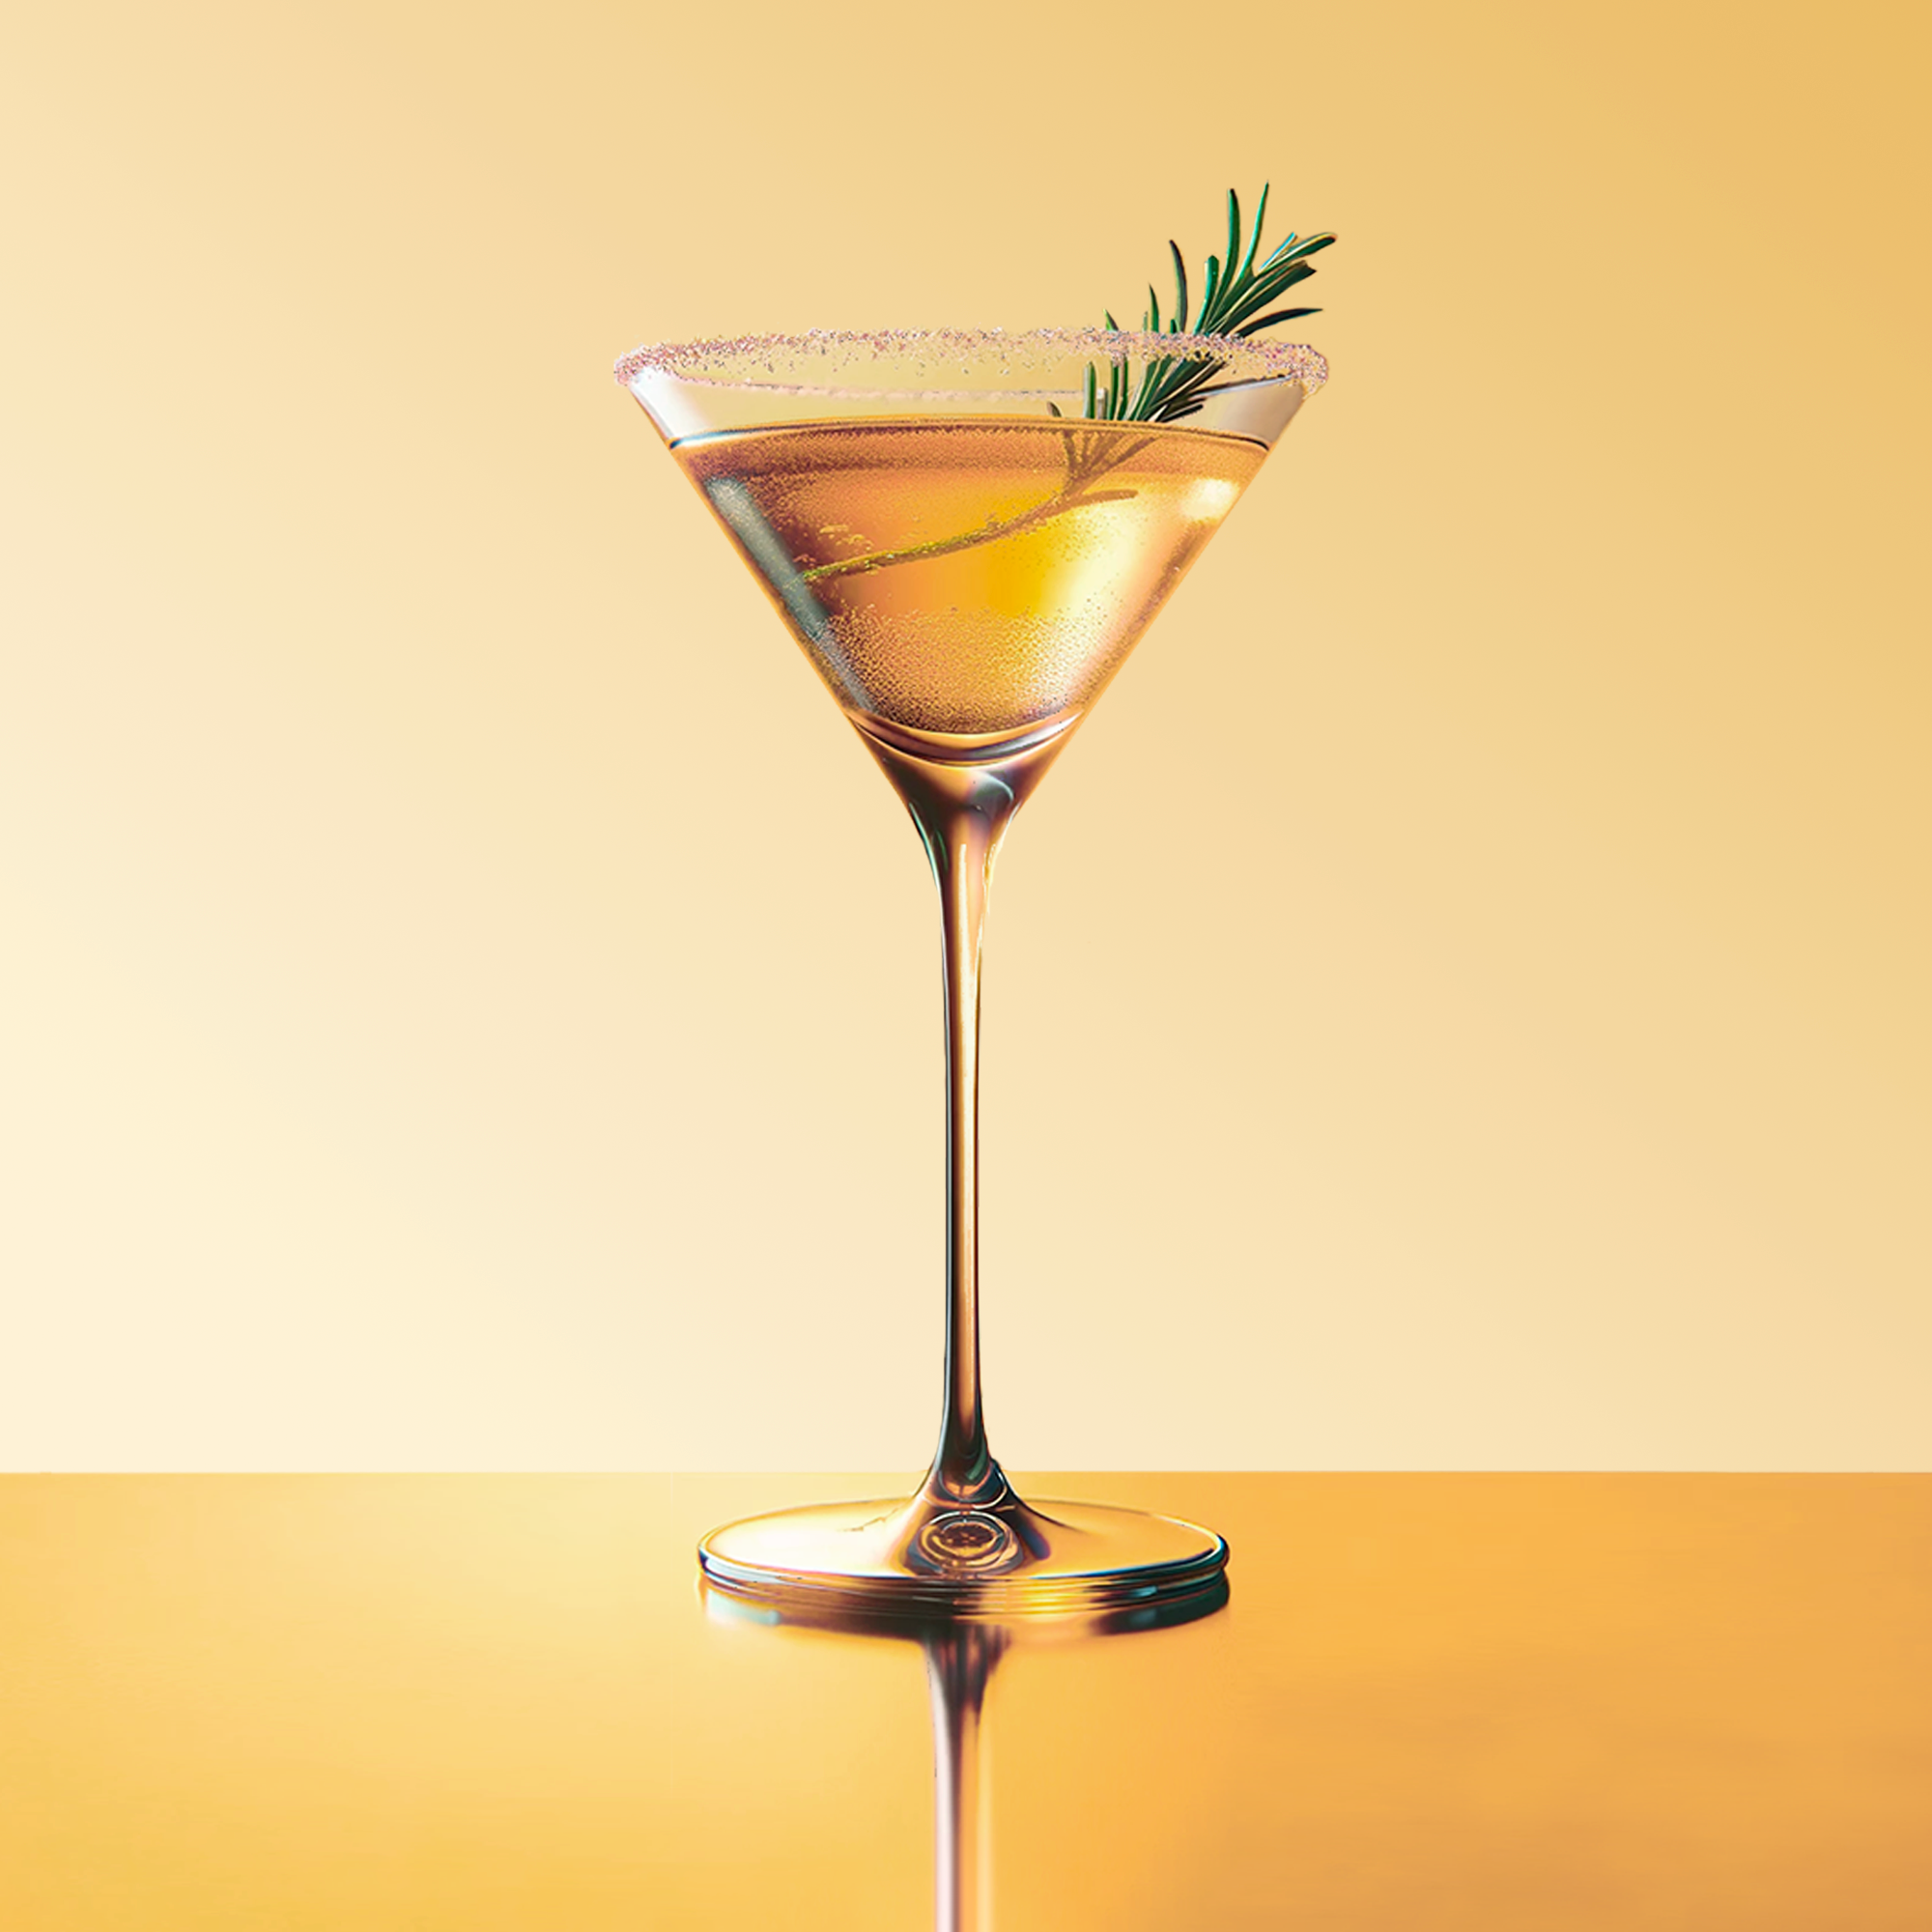 Martini glass filled with orange fizzy beverage. rosemary sprig garnish. orange background. salted rim